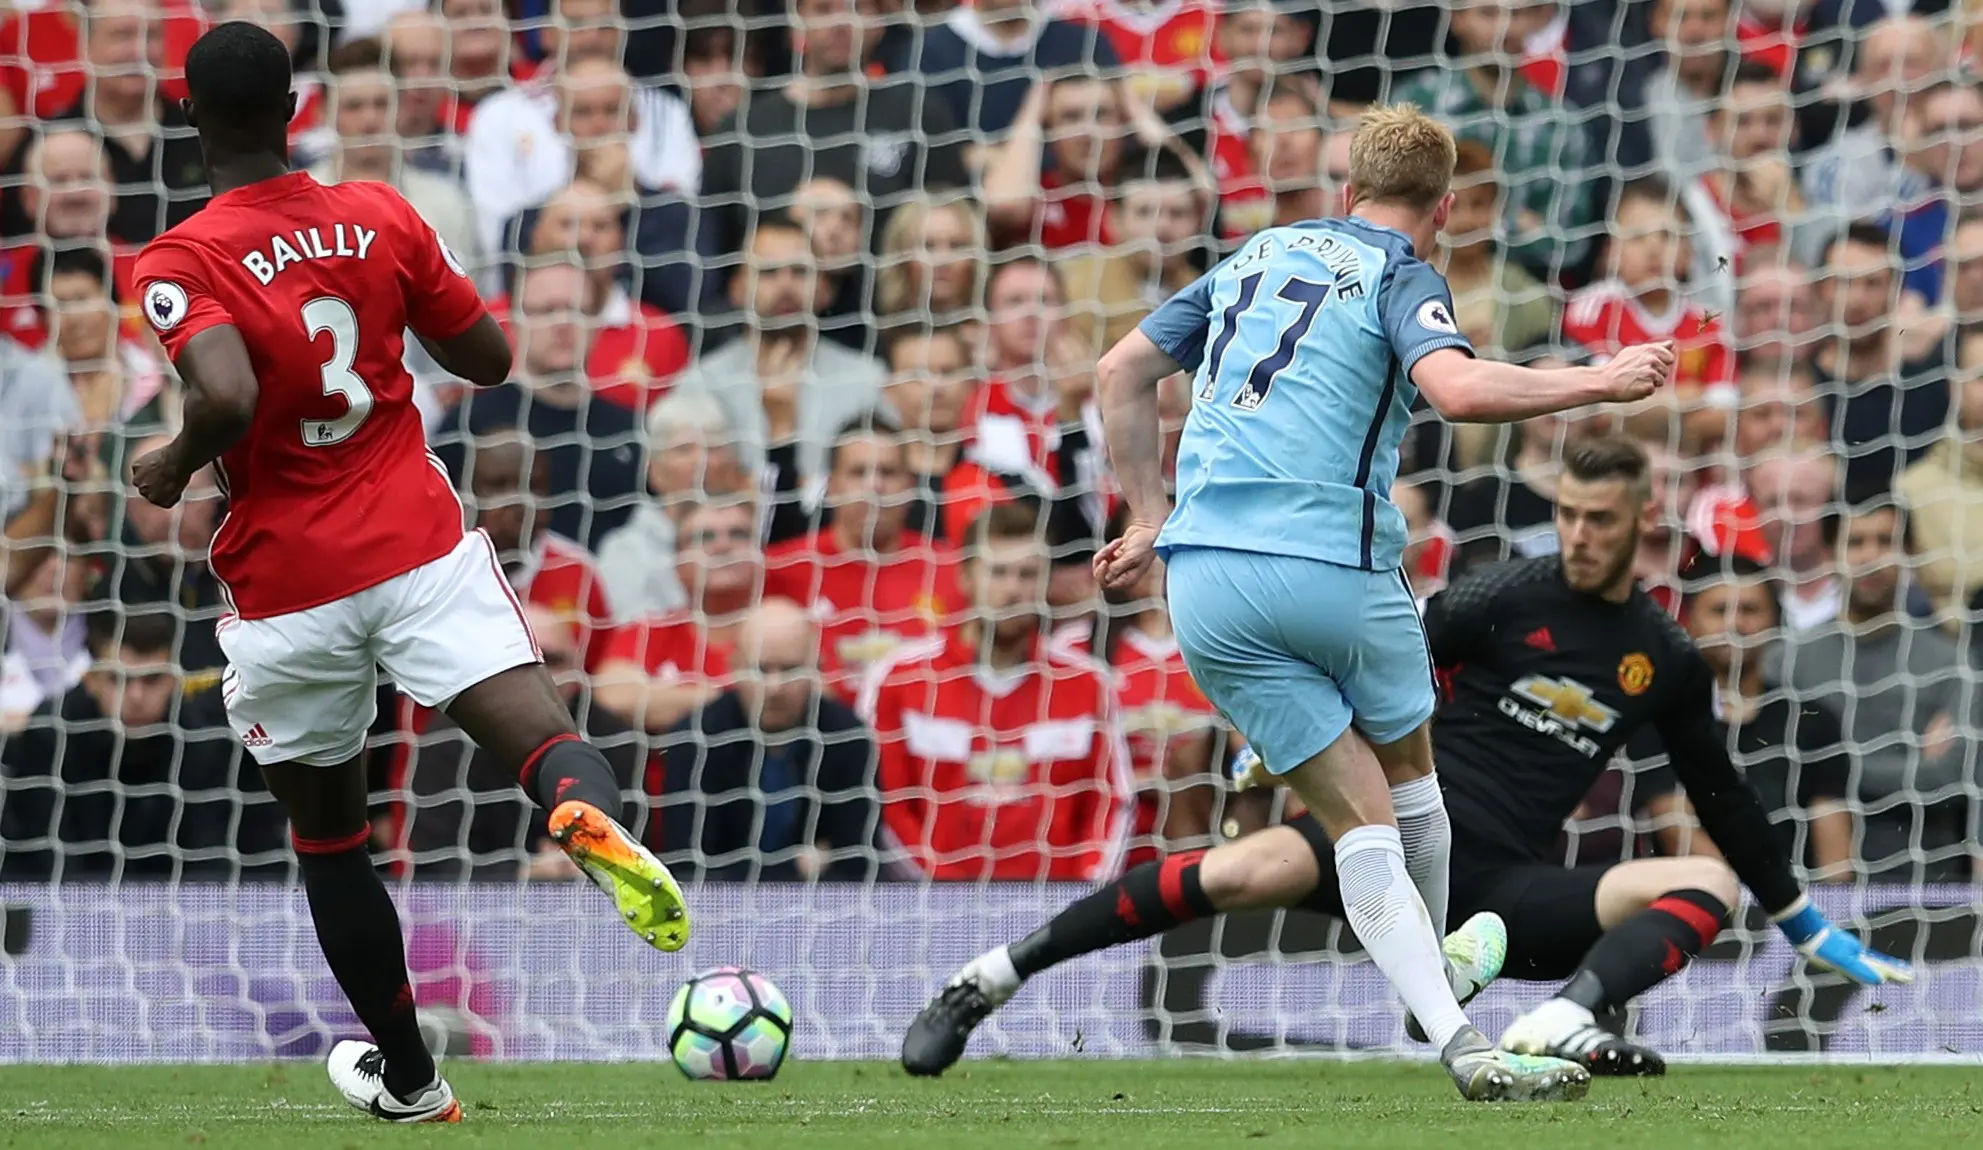 MU hanya sekali kalah di kandang sendiri pada Liga Inggris musim ini. Mereka menyerah 1-2 dari klub tetangga Manchester City, September 2016, dengan Kevin De Bruyne mencetak salah satu gol kemenangan tim tamu. (Reuters/Phil Noble)